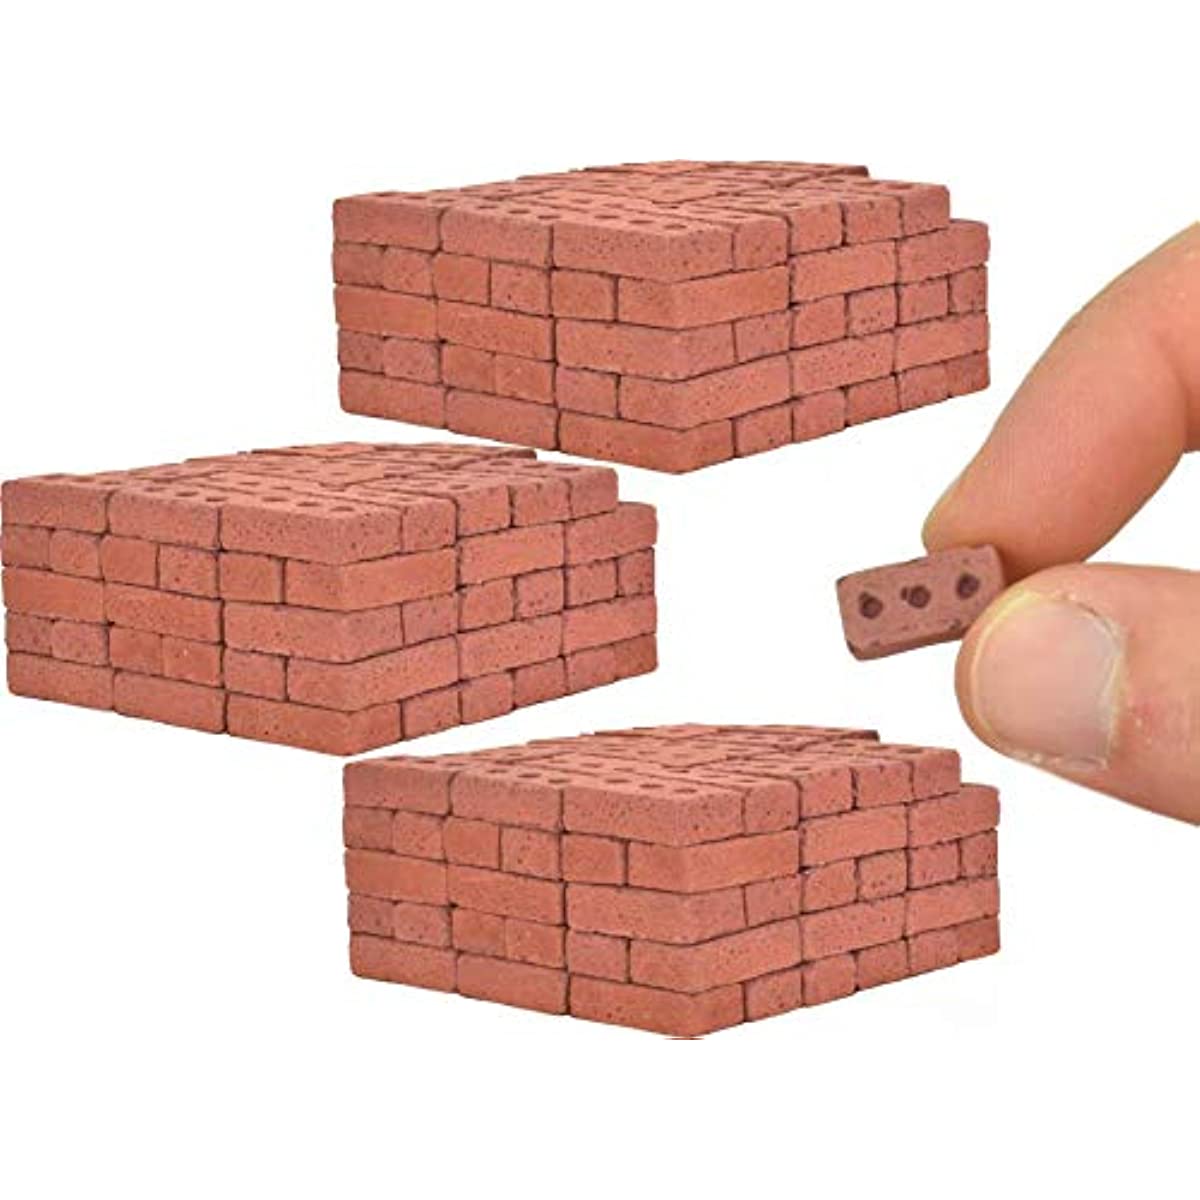 Miniature Bricks with Pallet 1:12 Scale, Mini Building Materials, School  Project